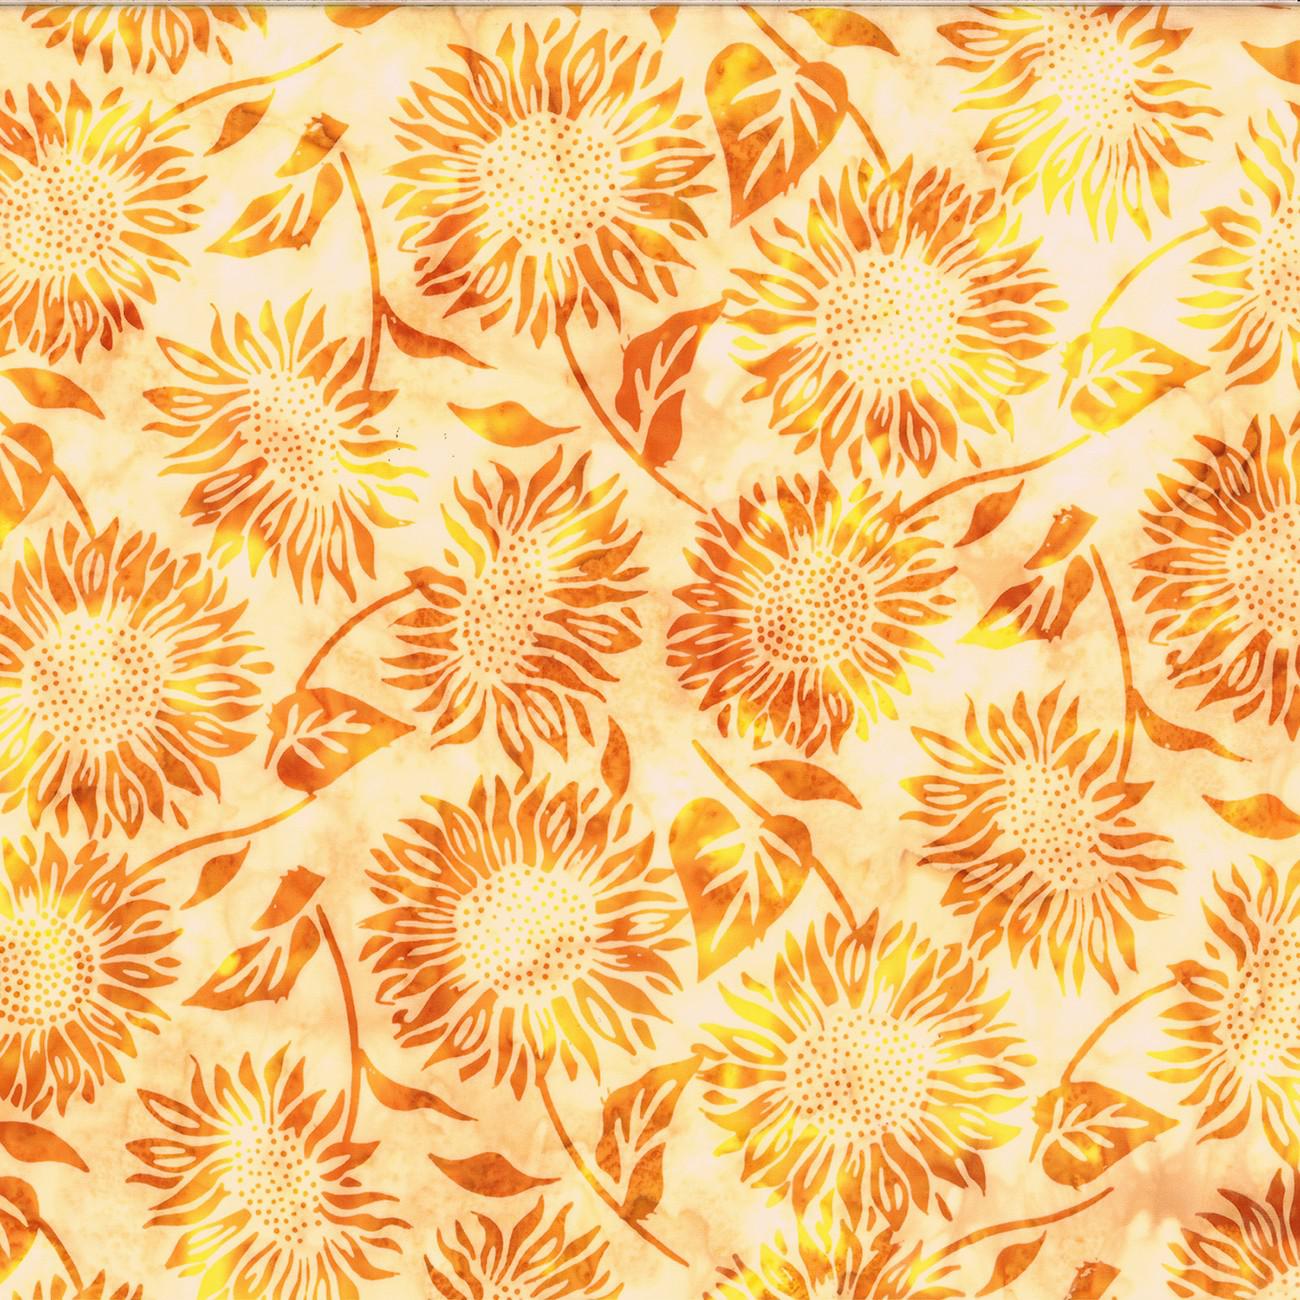 Up With the Sun Celestials Vines Bali Batik Fabric - Hoffman Fabrics